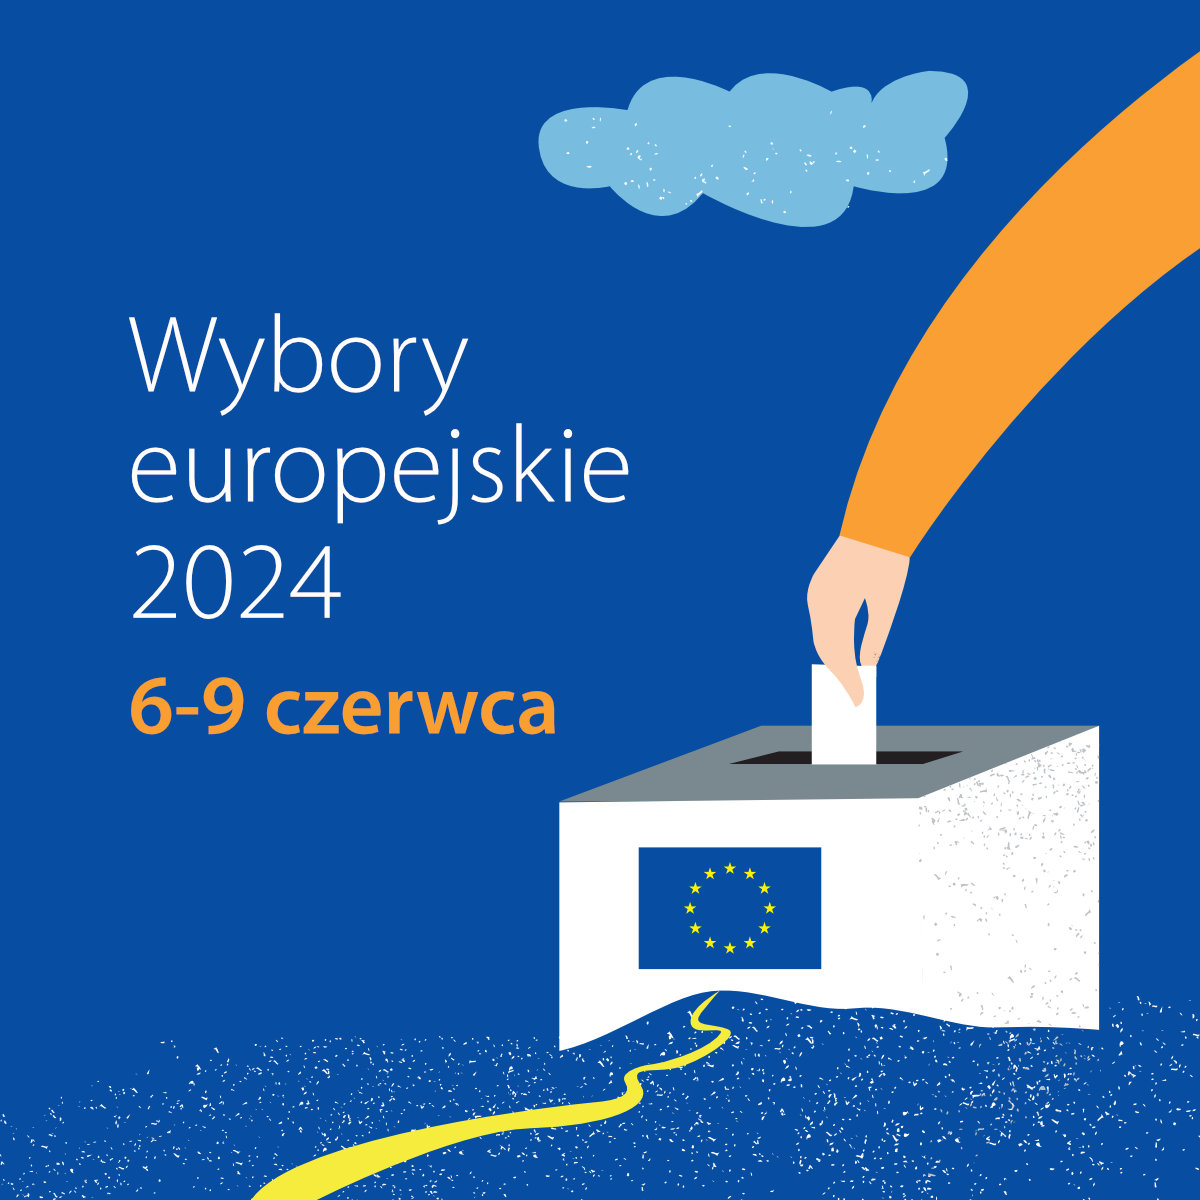 Wybory europejskie 2024 - Square.jpg